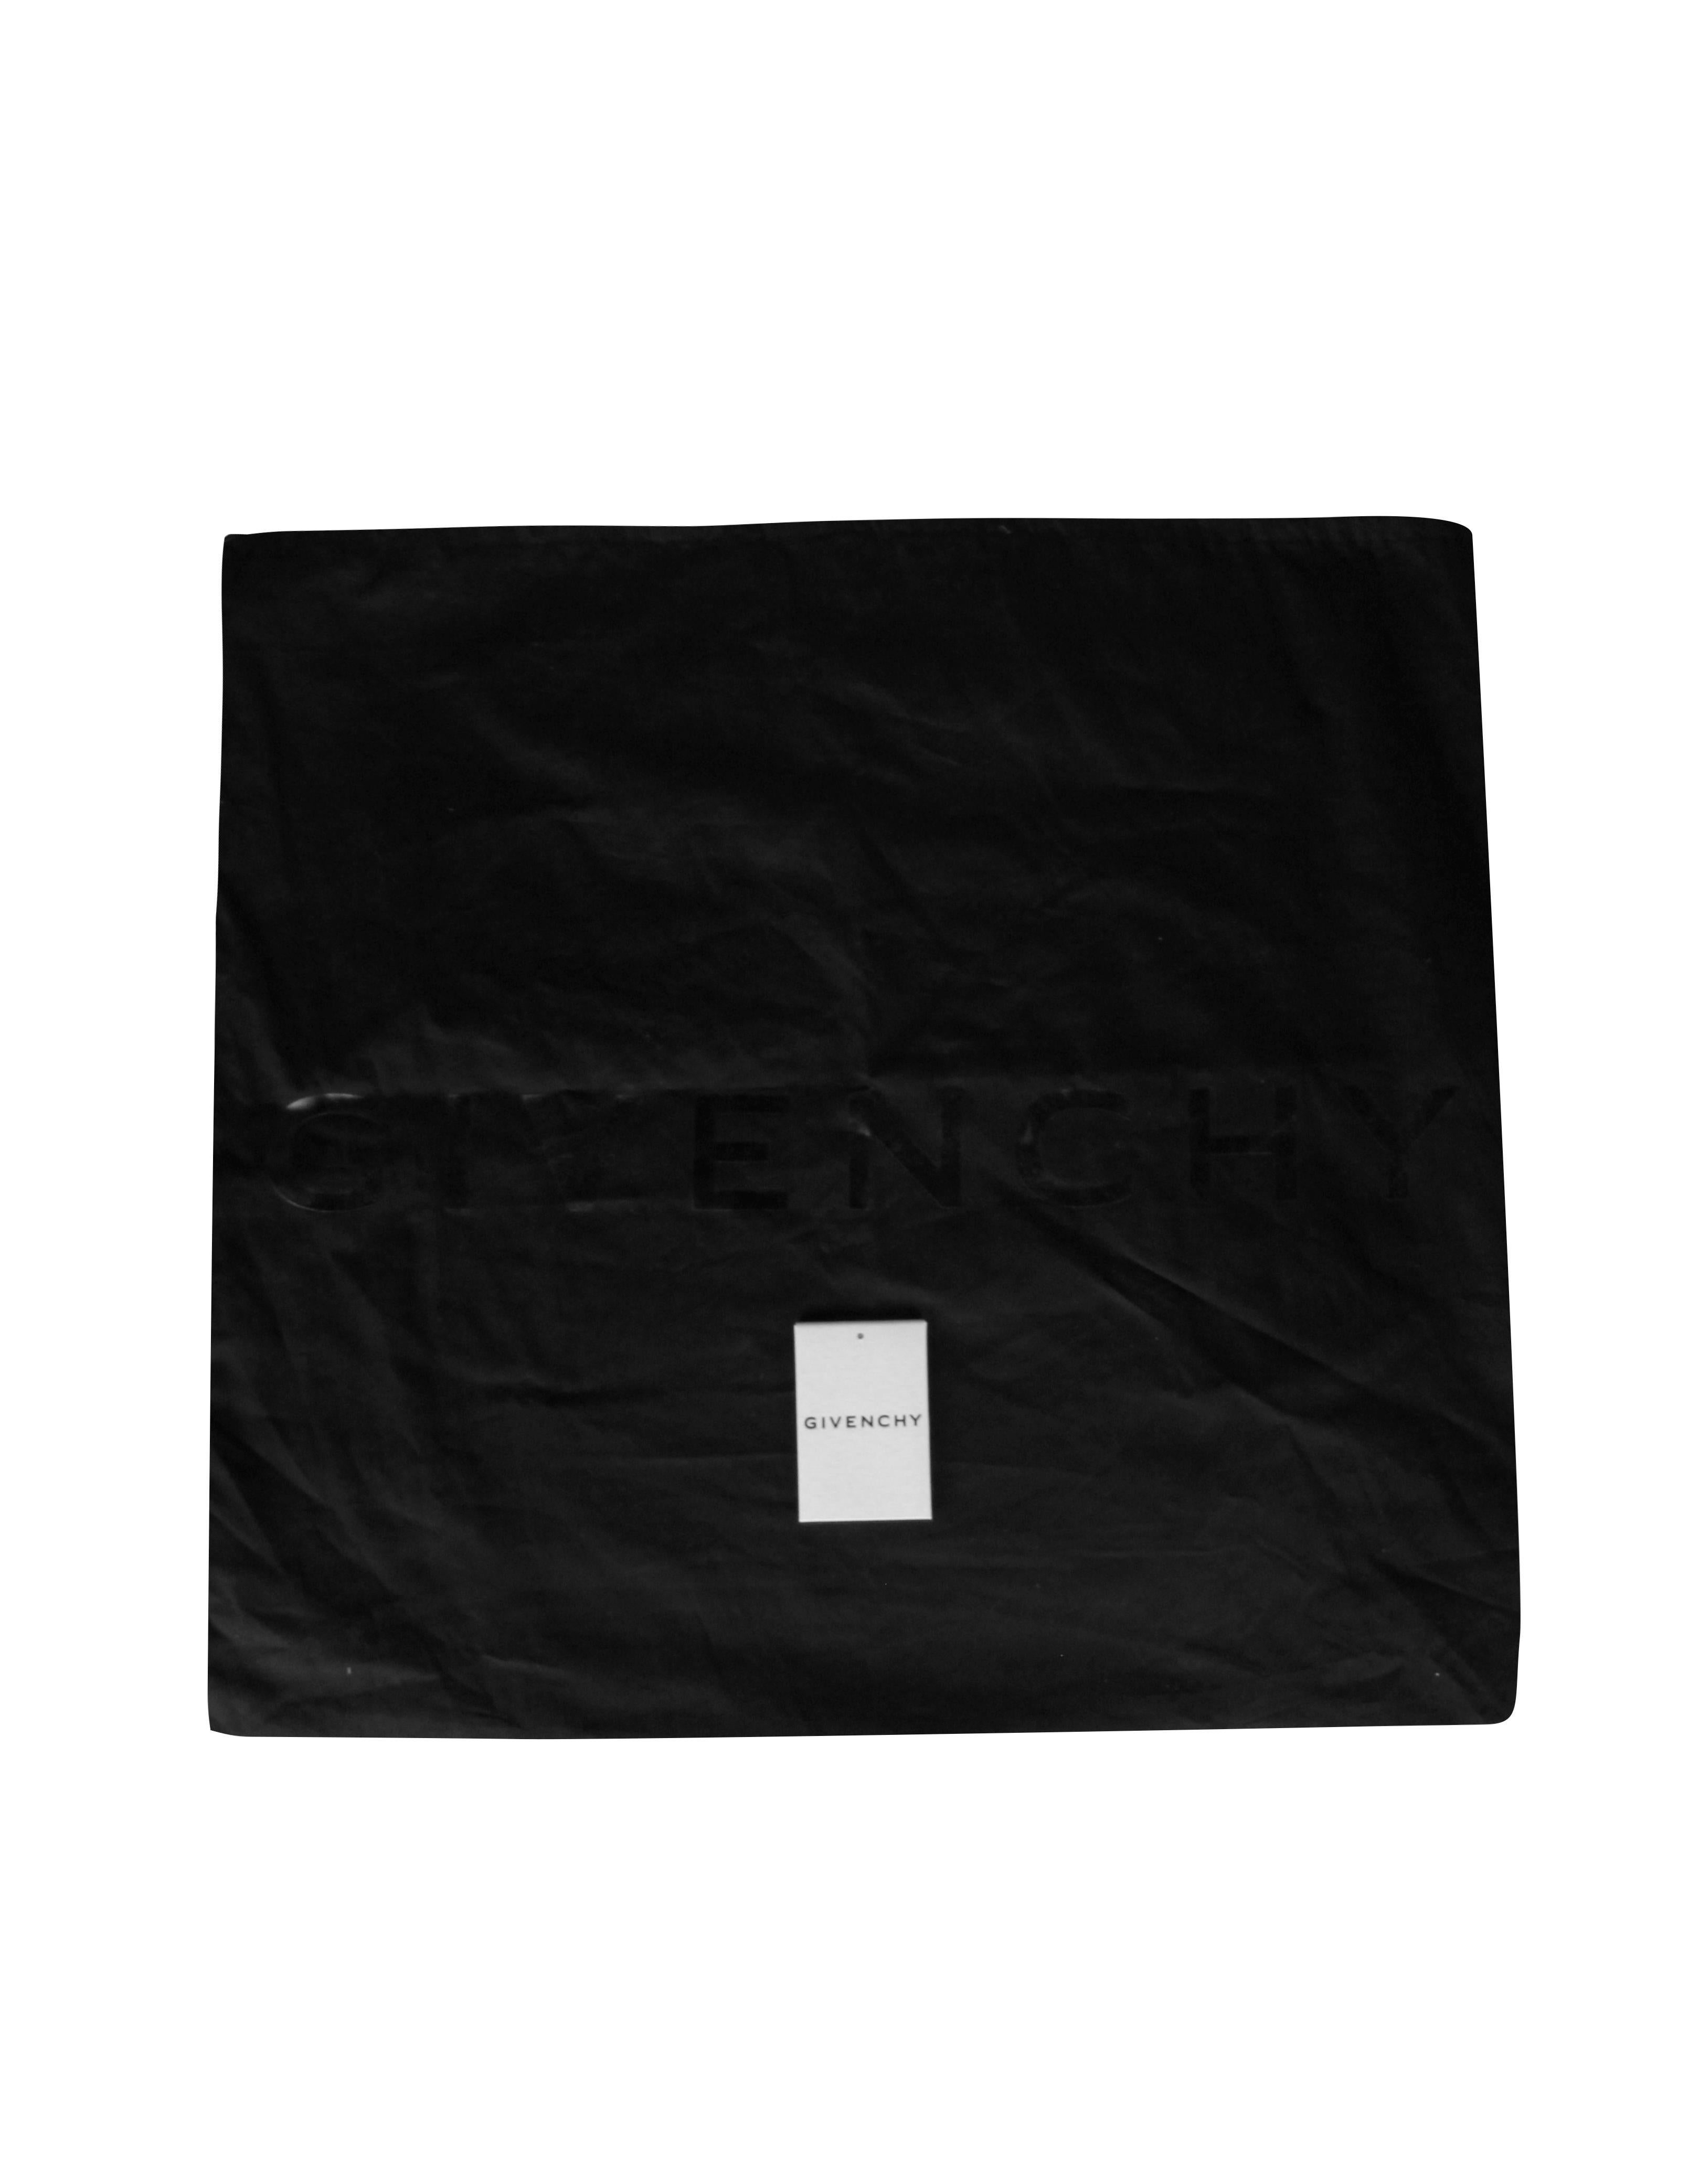 Givenchy Black Soft Calfskin Medium Soft Antigona Bag rt. $2, 650 1